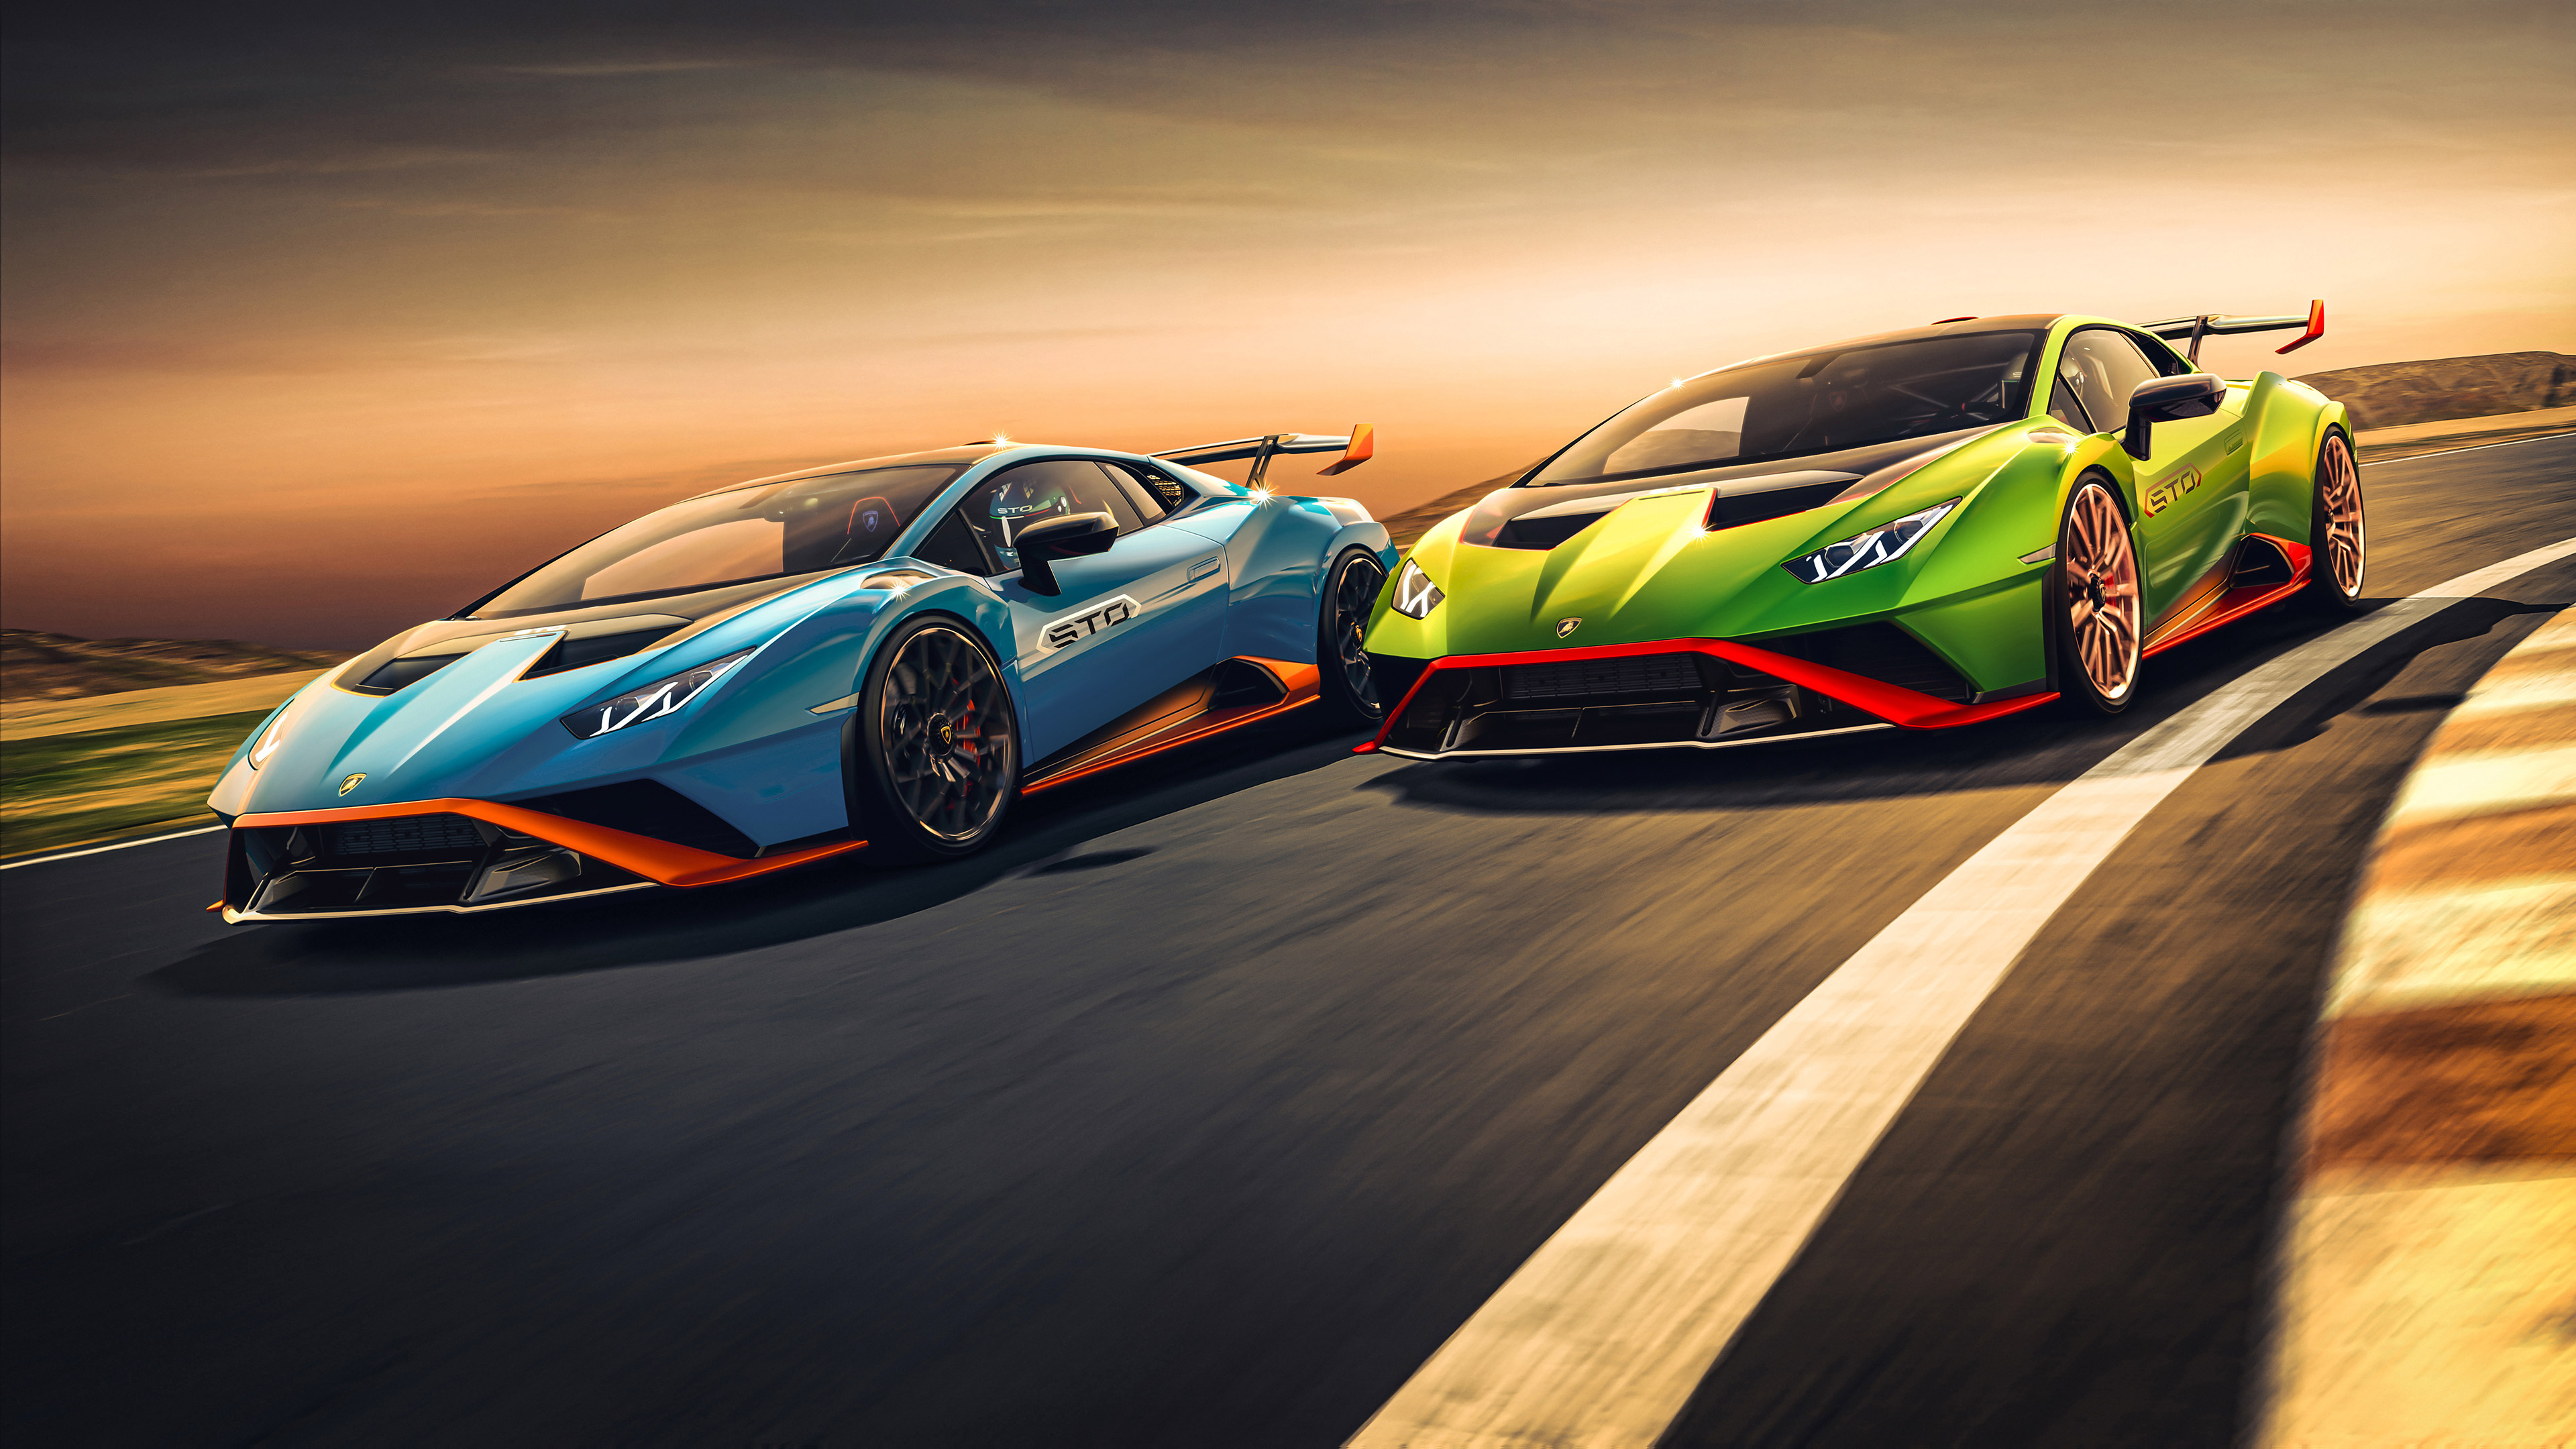 STO Race, Lamborghini Huracan Wallpaper, 3840x2160 4K Desktop